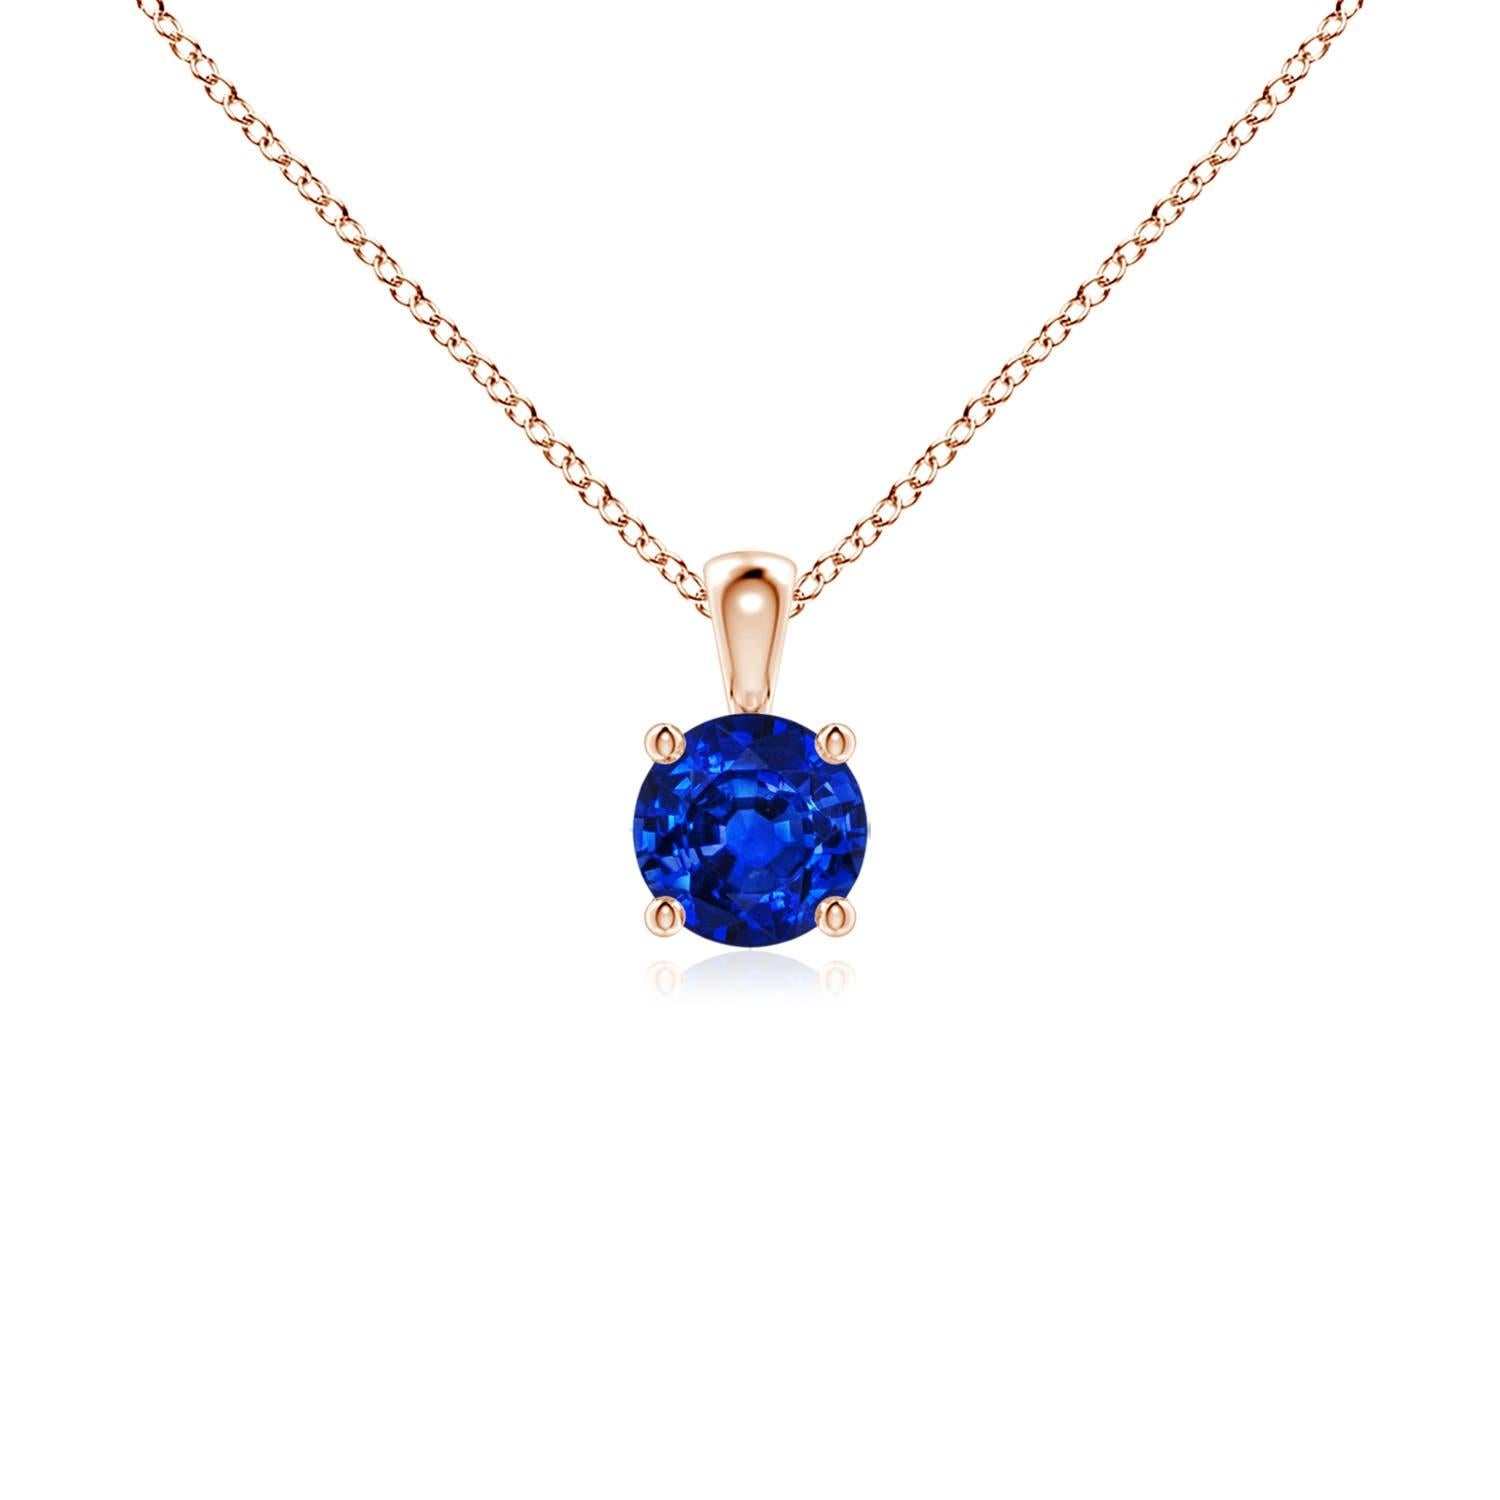 Pendentif solitaire en or rose 14 carats avec saphir bleu rond naturel, taille 4 mm